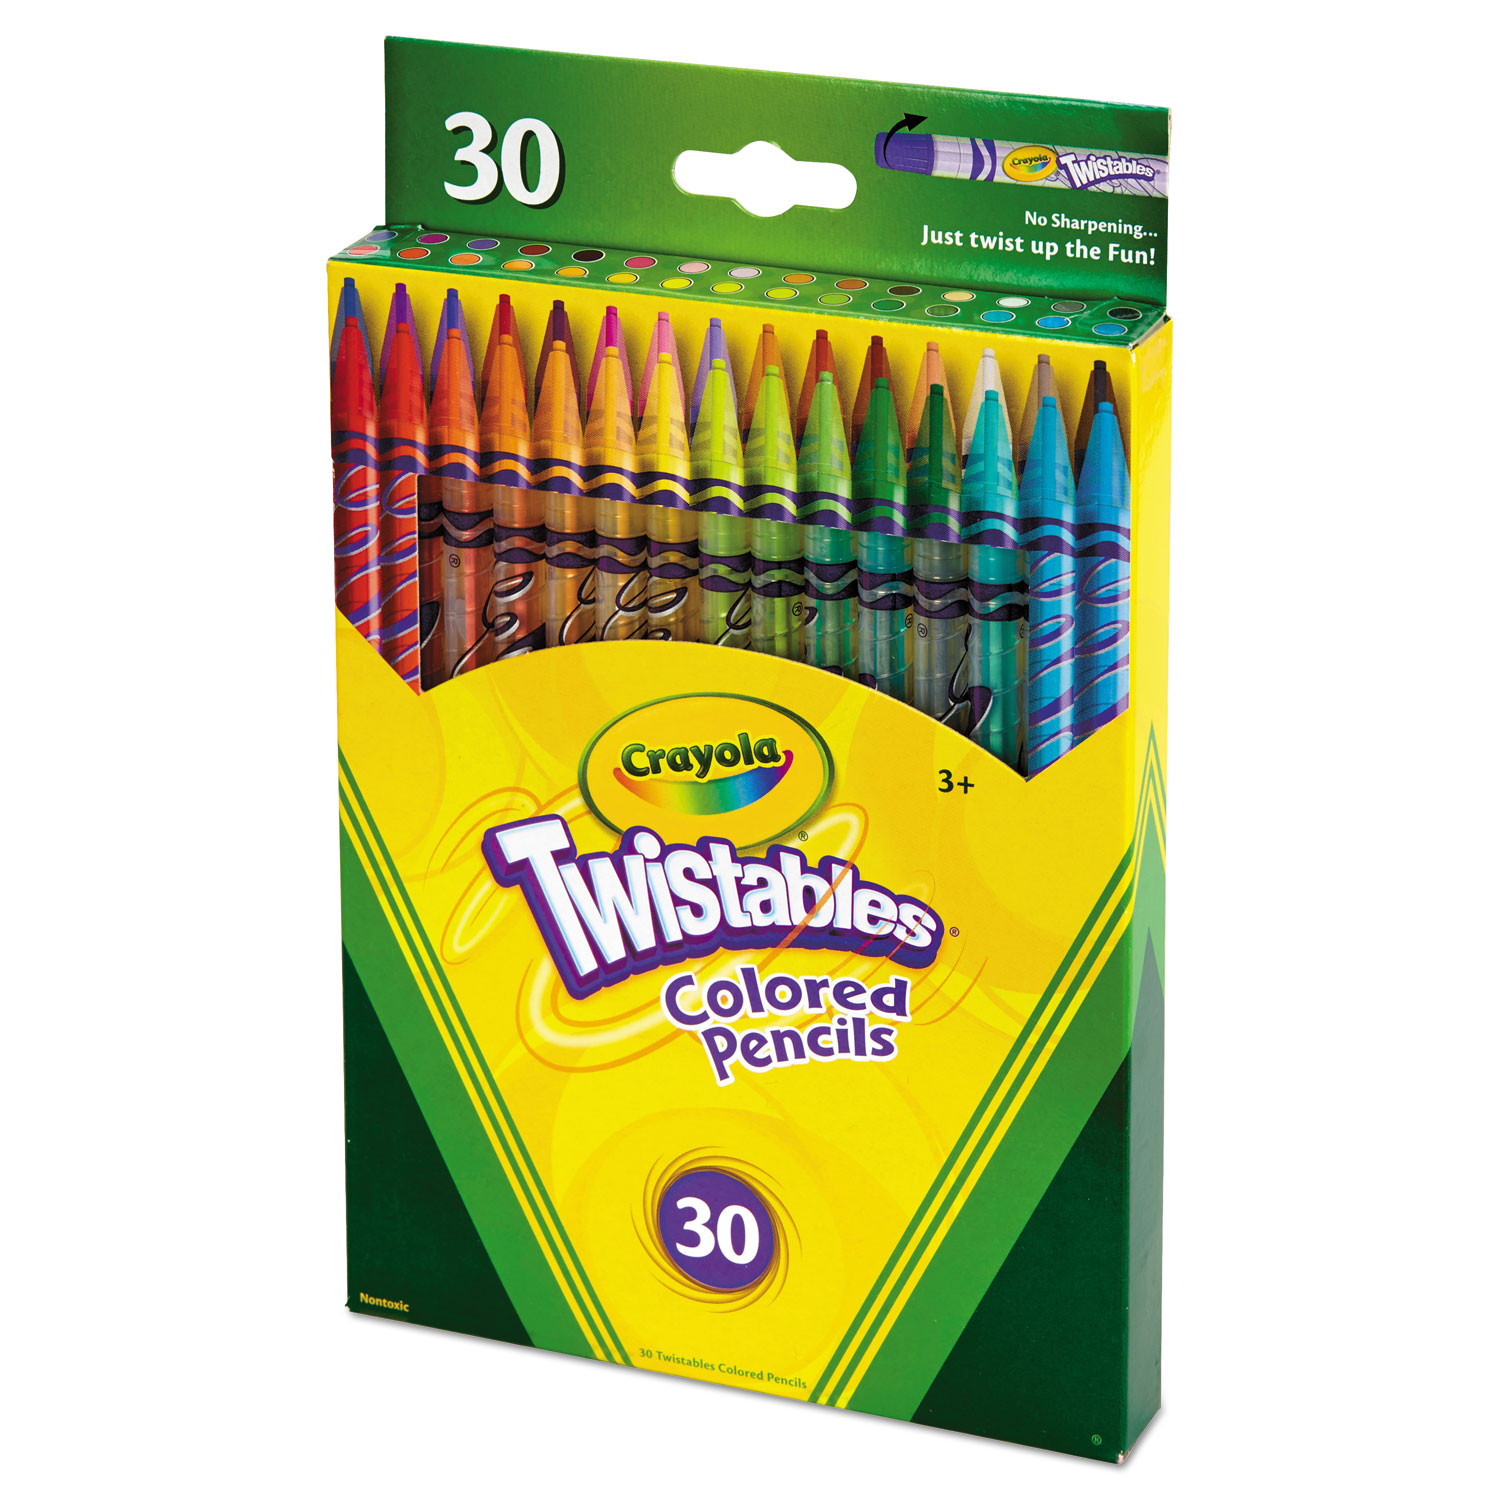 Review: Crayola Graphite No.2/HB Pencils